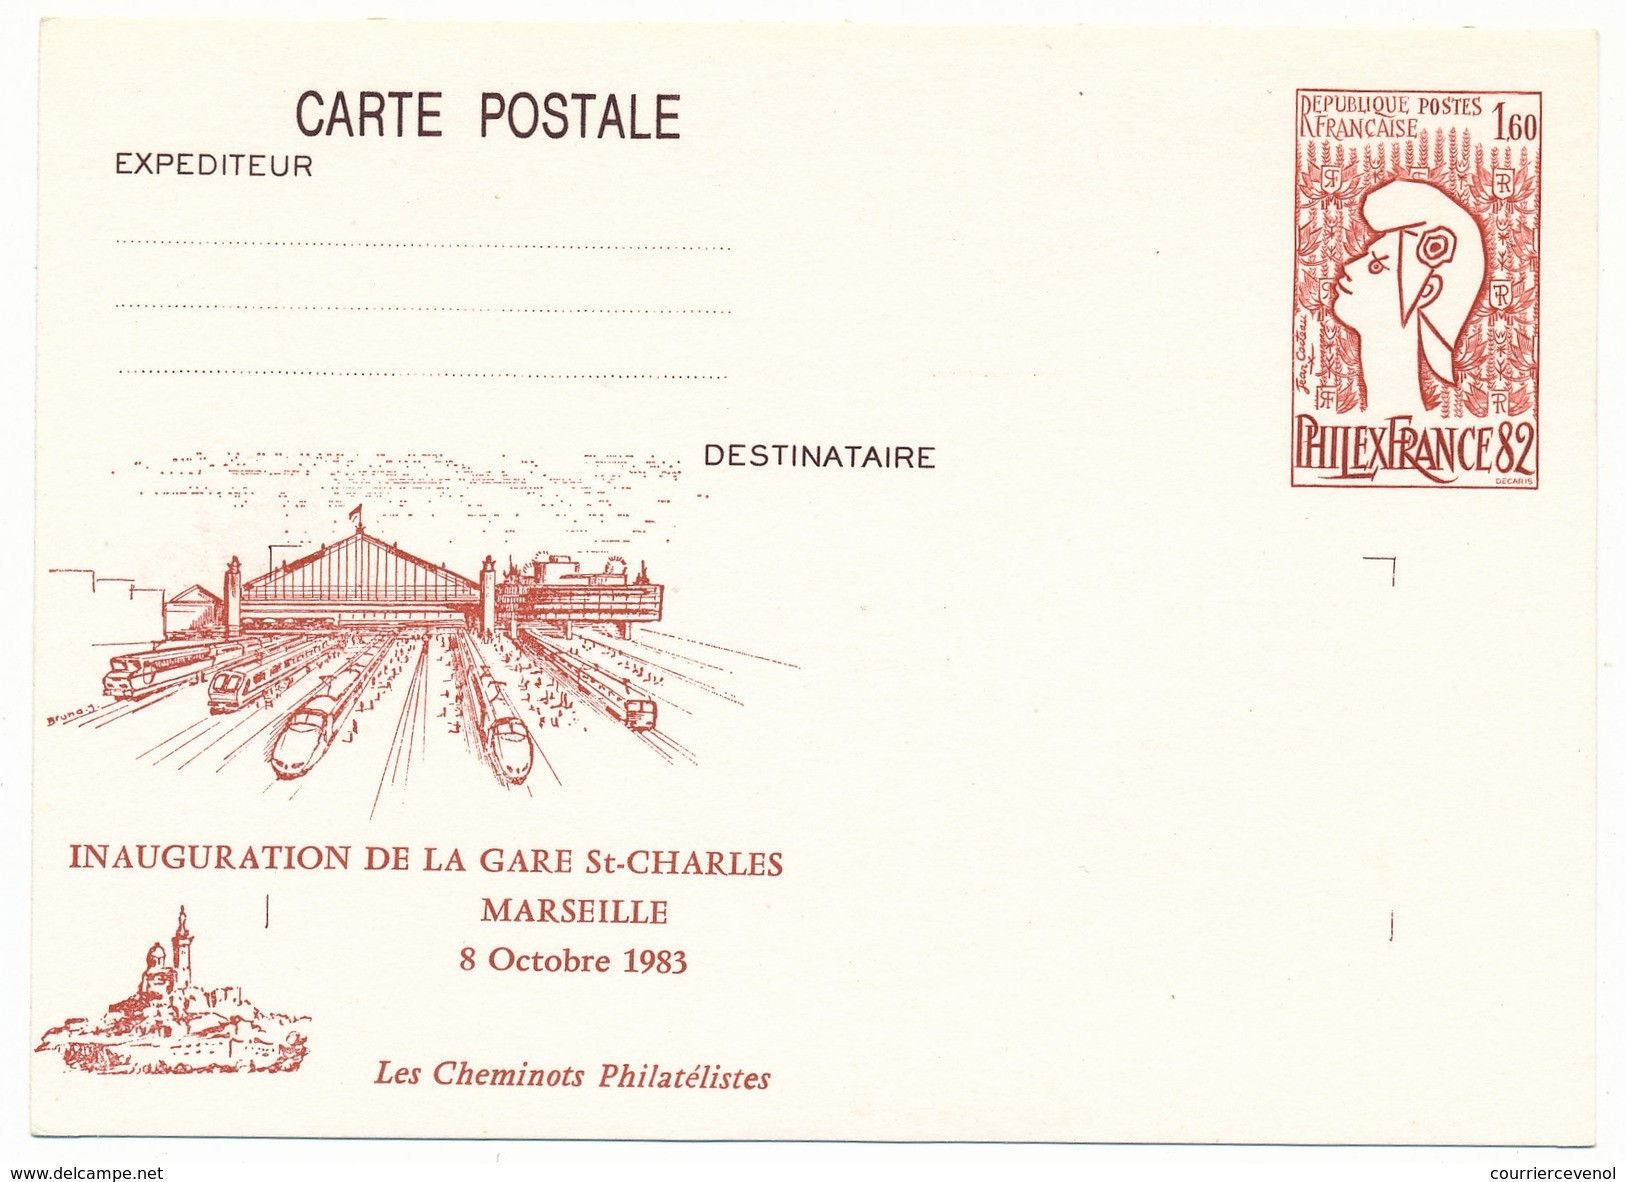 FRANCE => Entier Repiqué => CP 1,60 Philexfrance / Inauguration De La Gare St Charles - Marseille 1983 - AK Mit Aufdruck (vor 1995)